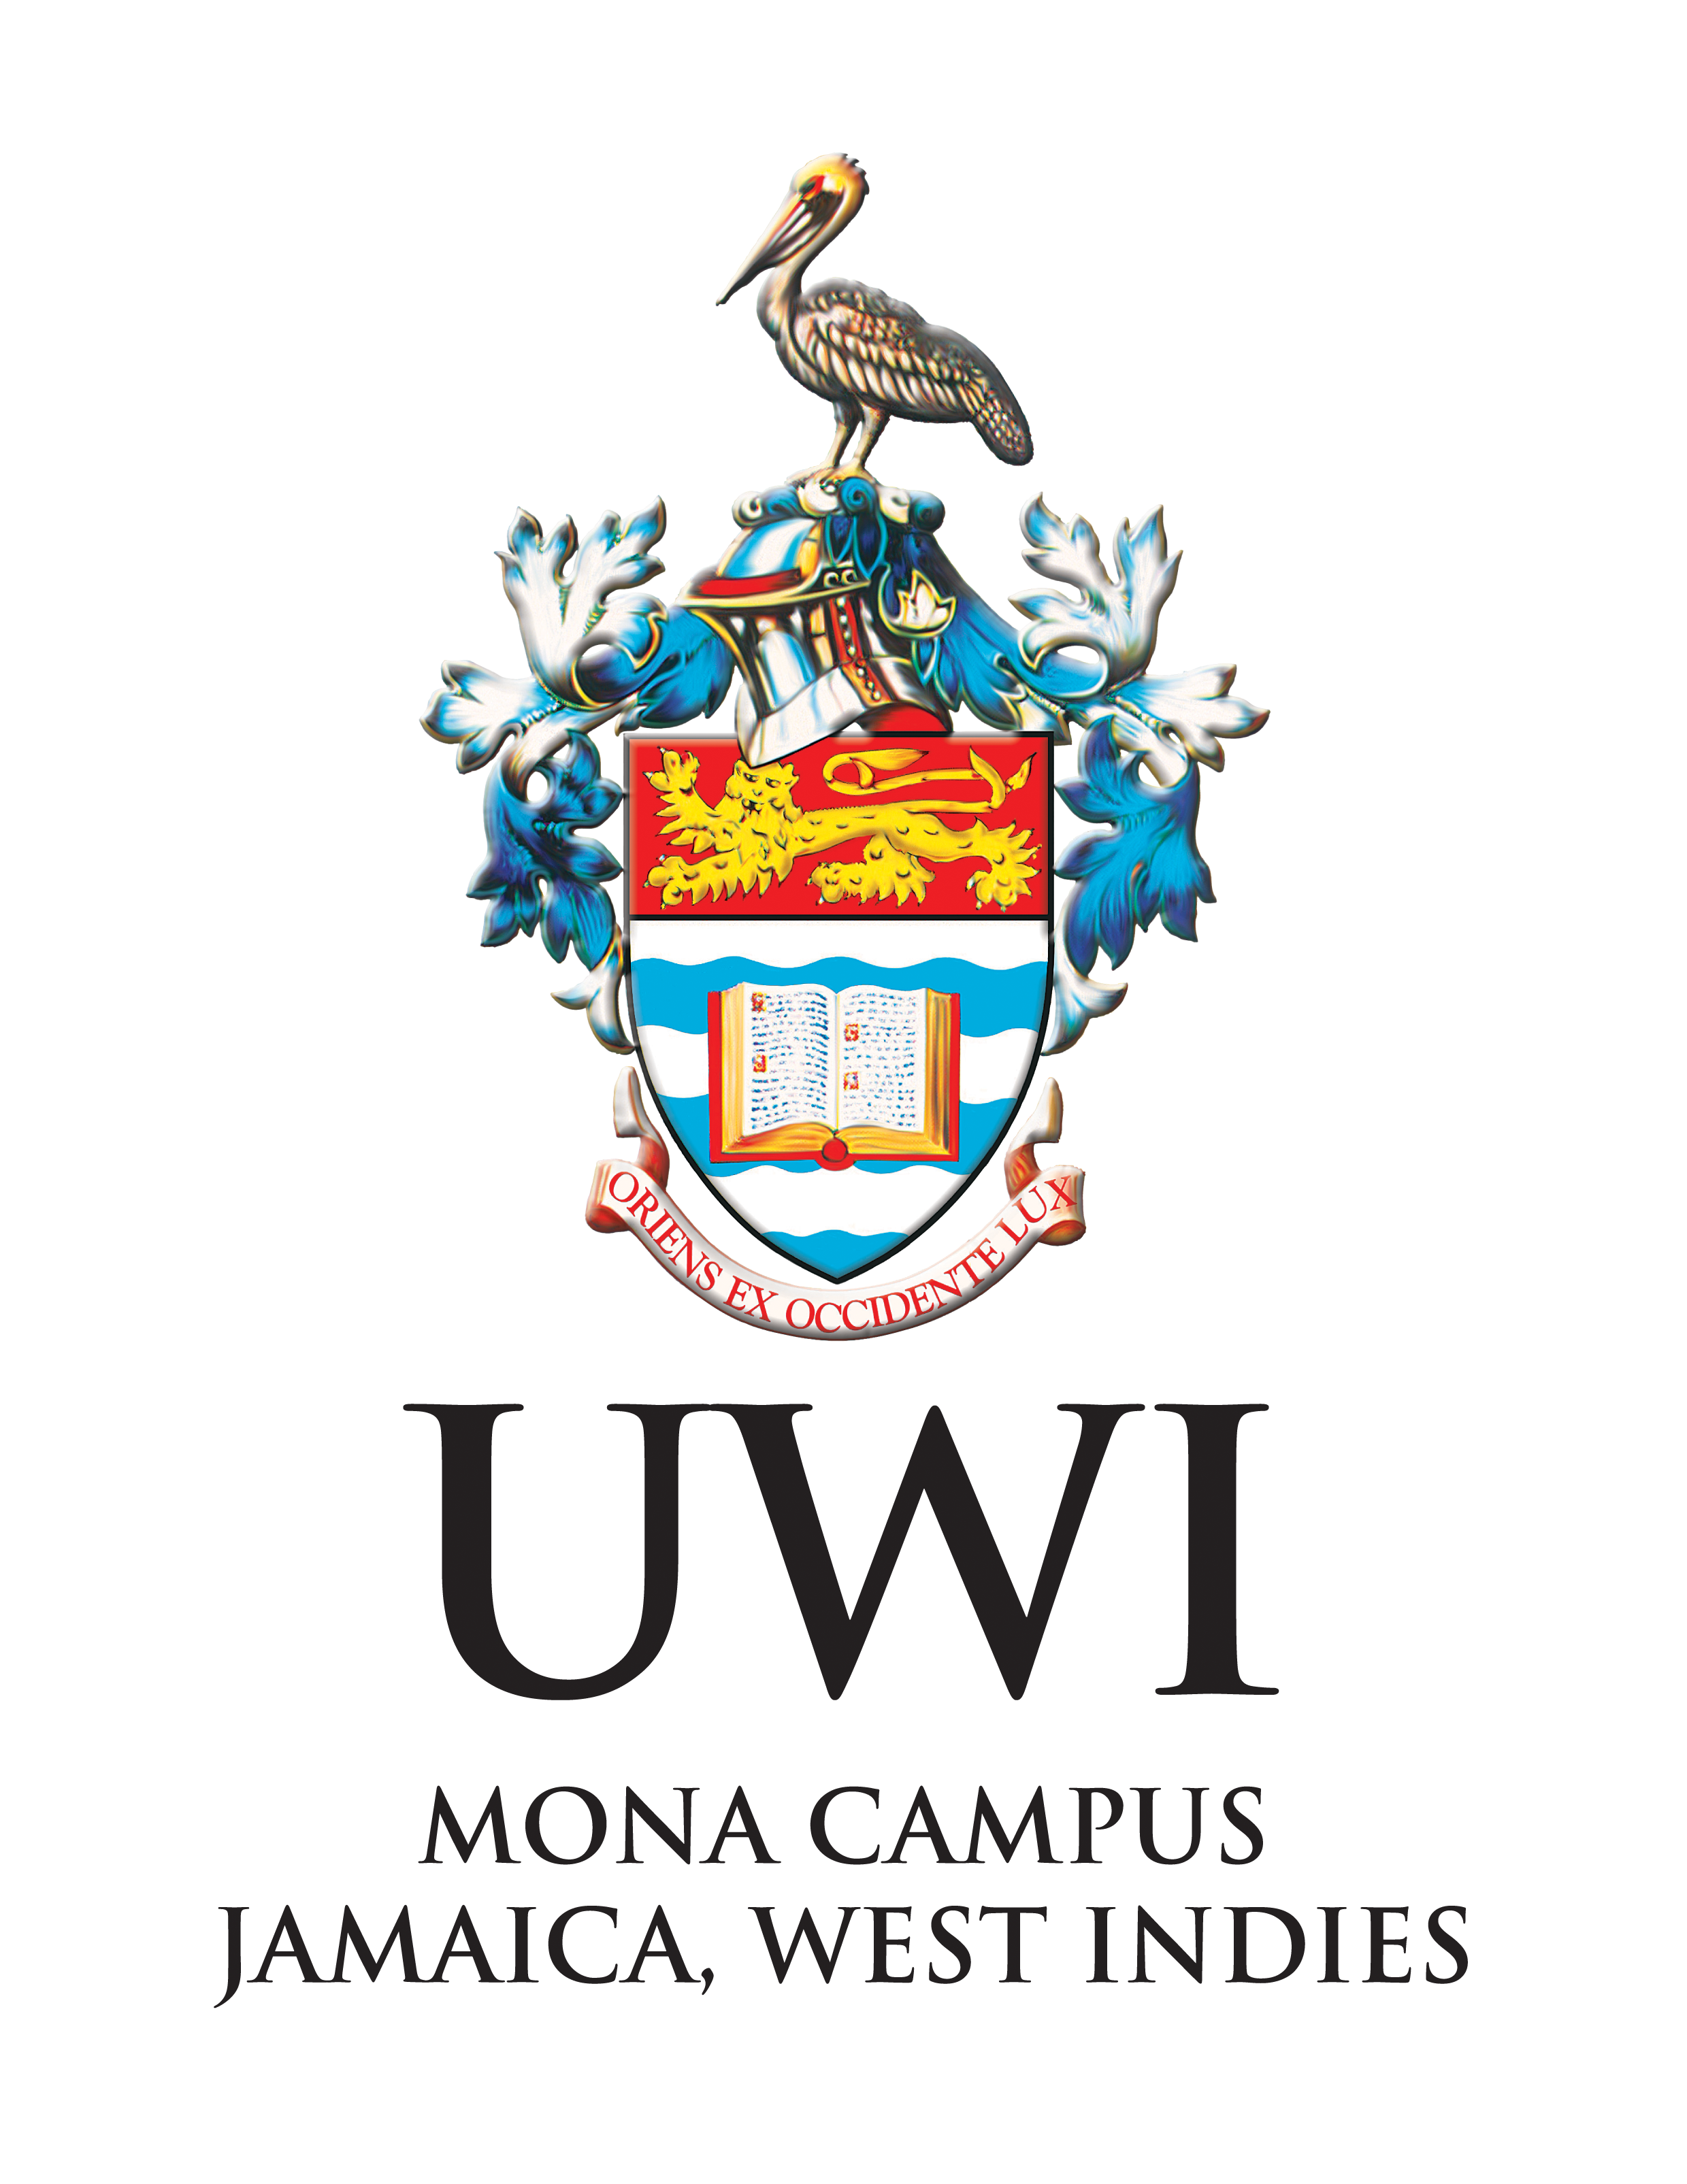 The UWI, Mona Campus